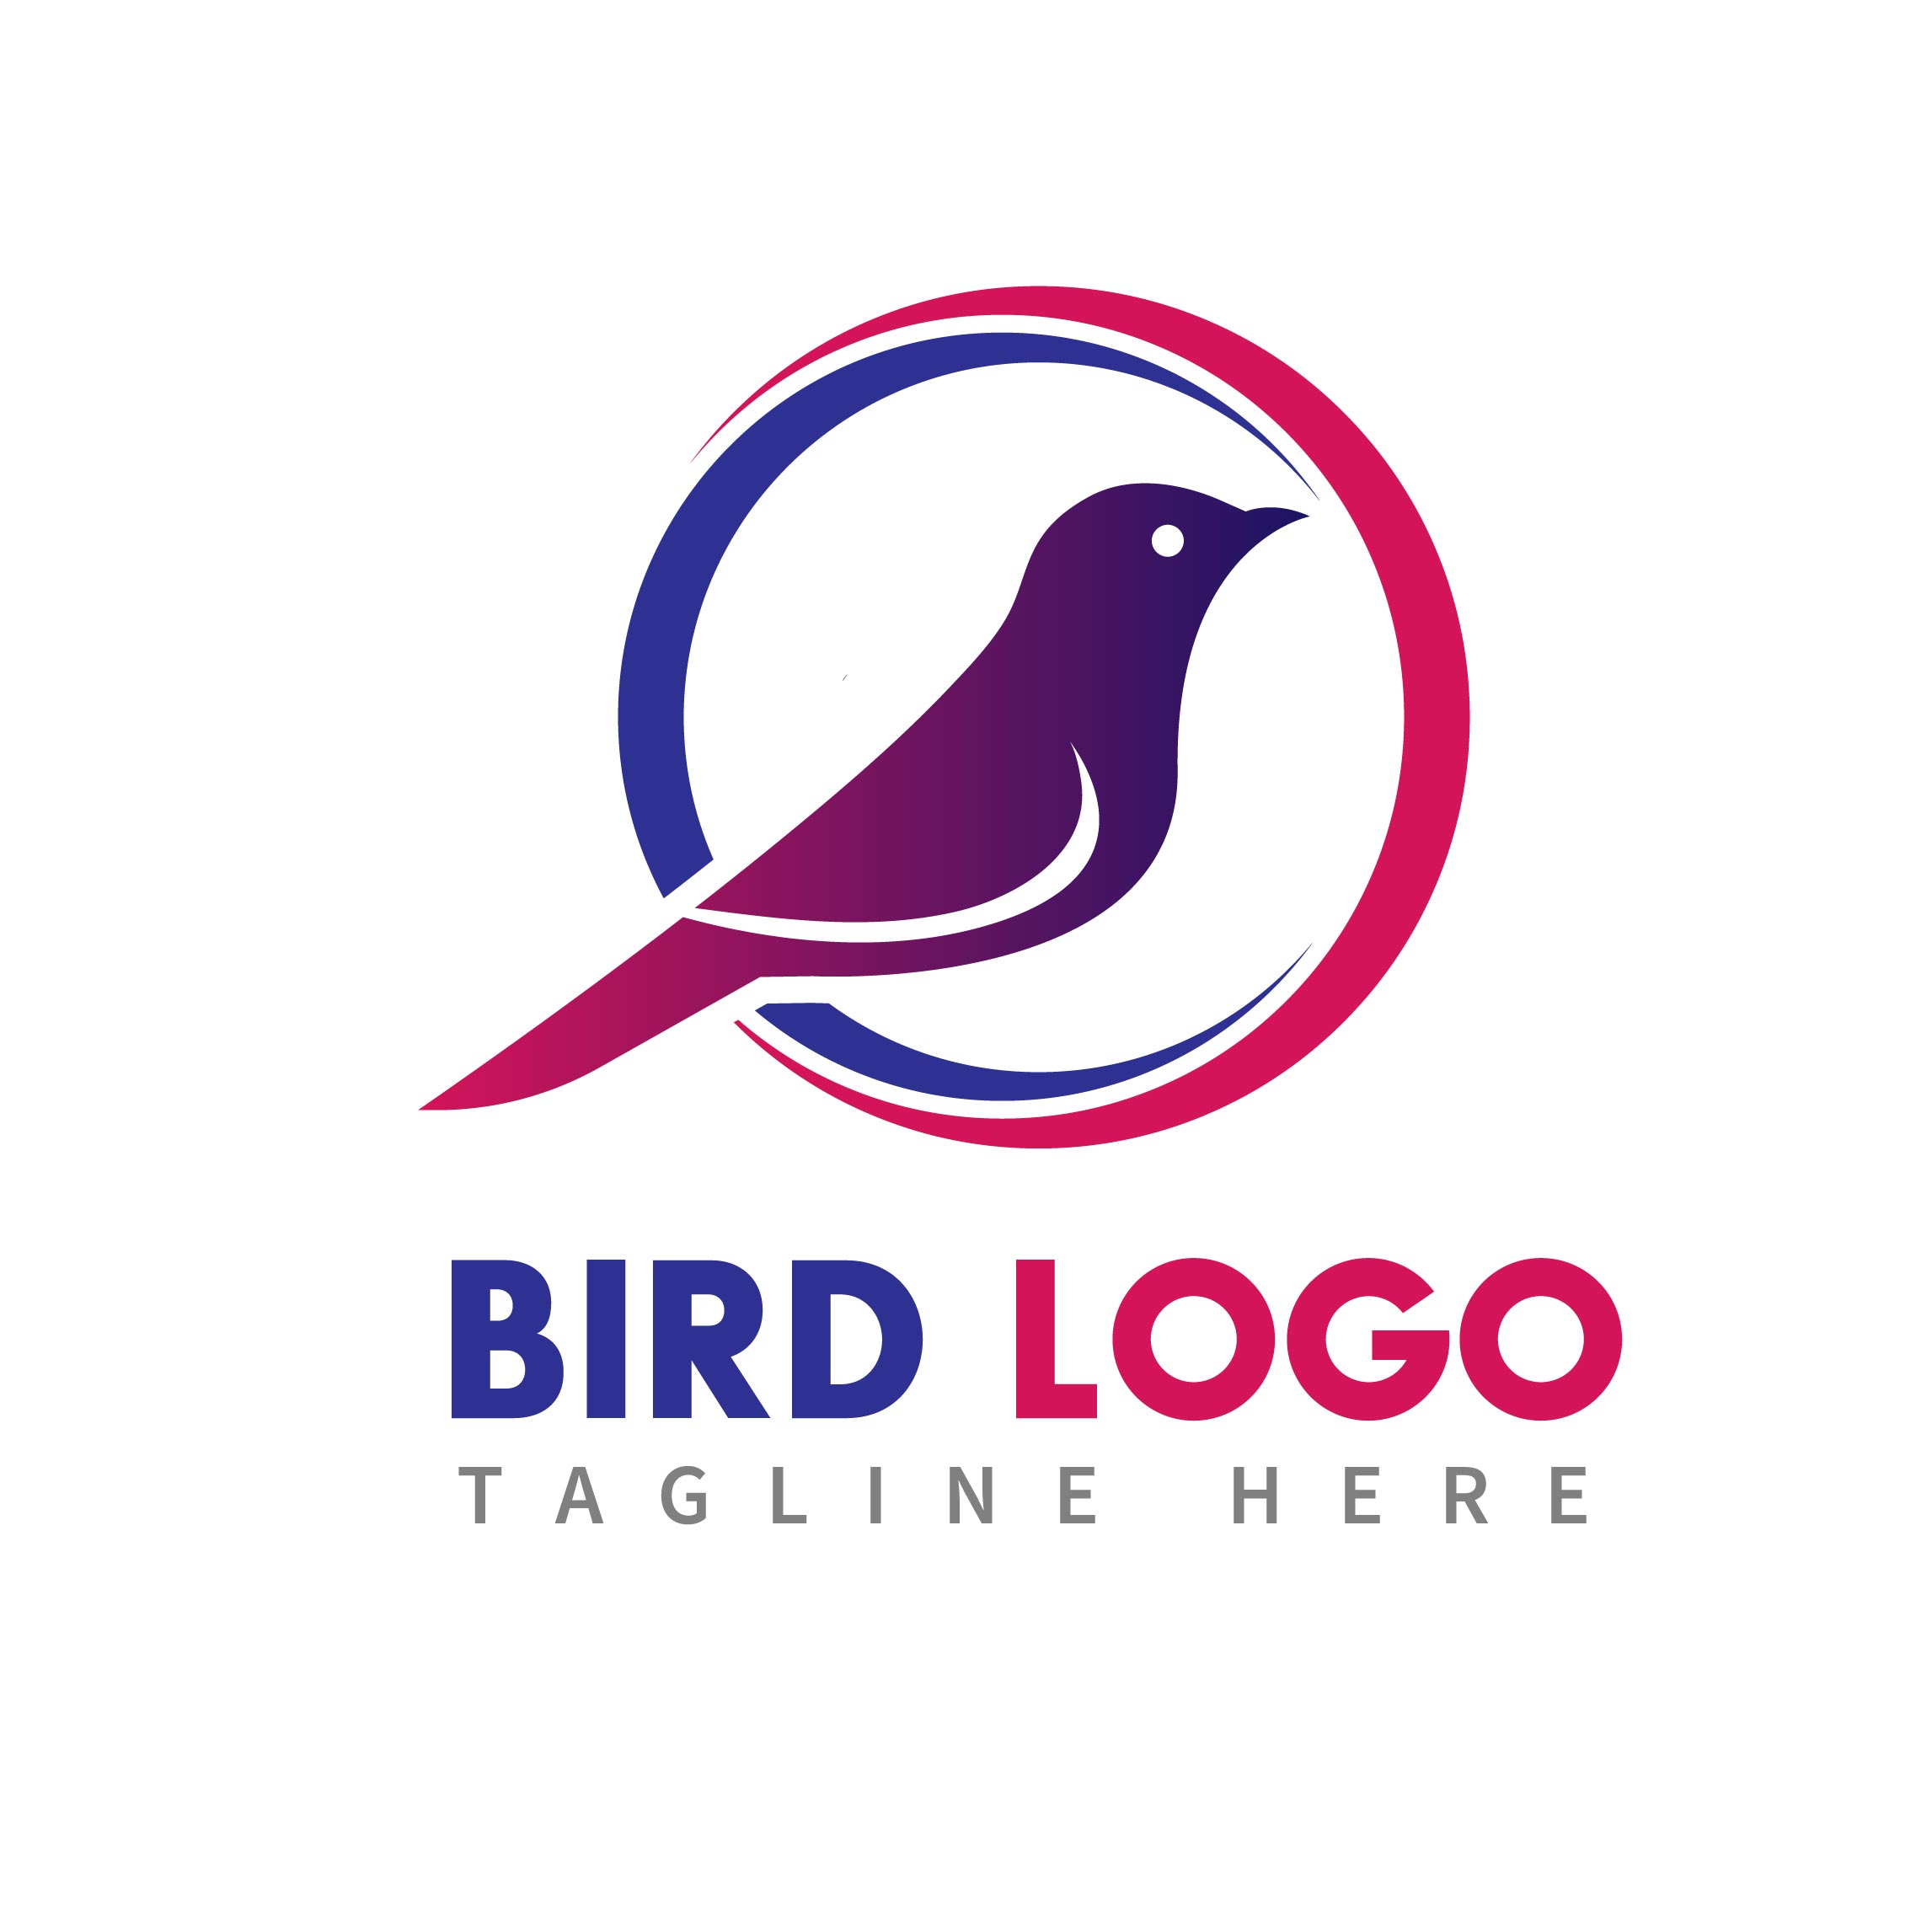 Bird Iconic Logo Design Graphic cover image.